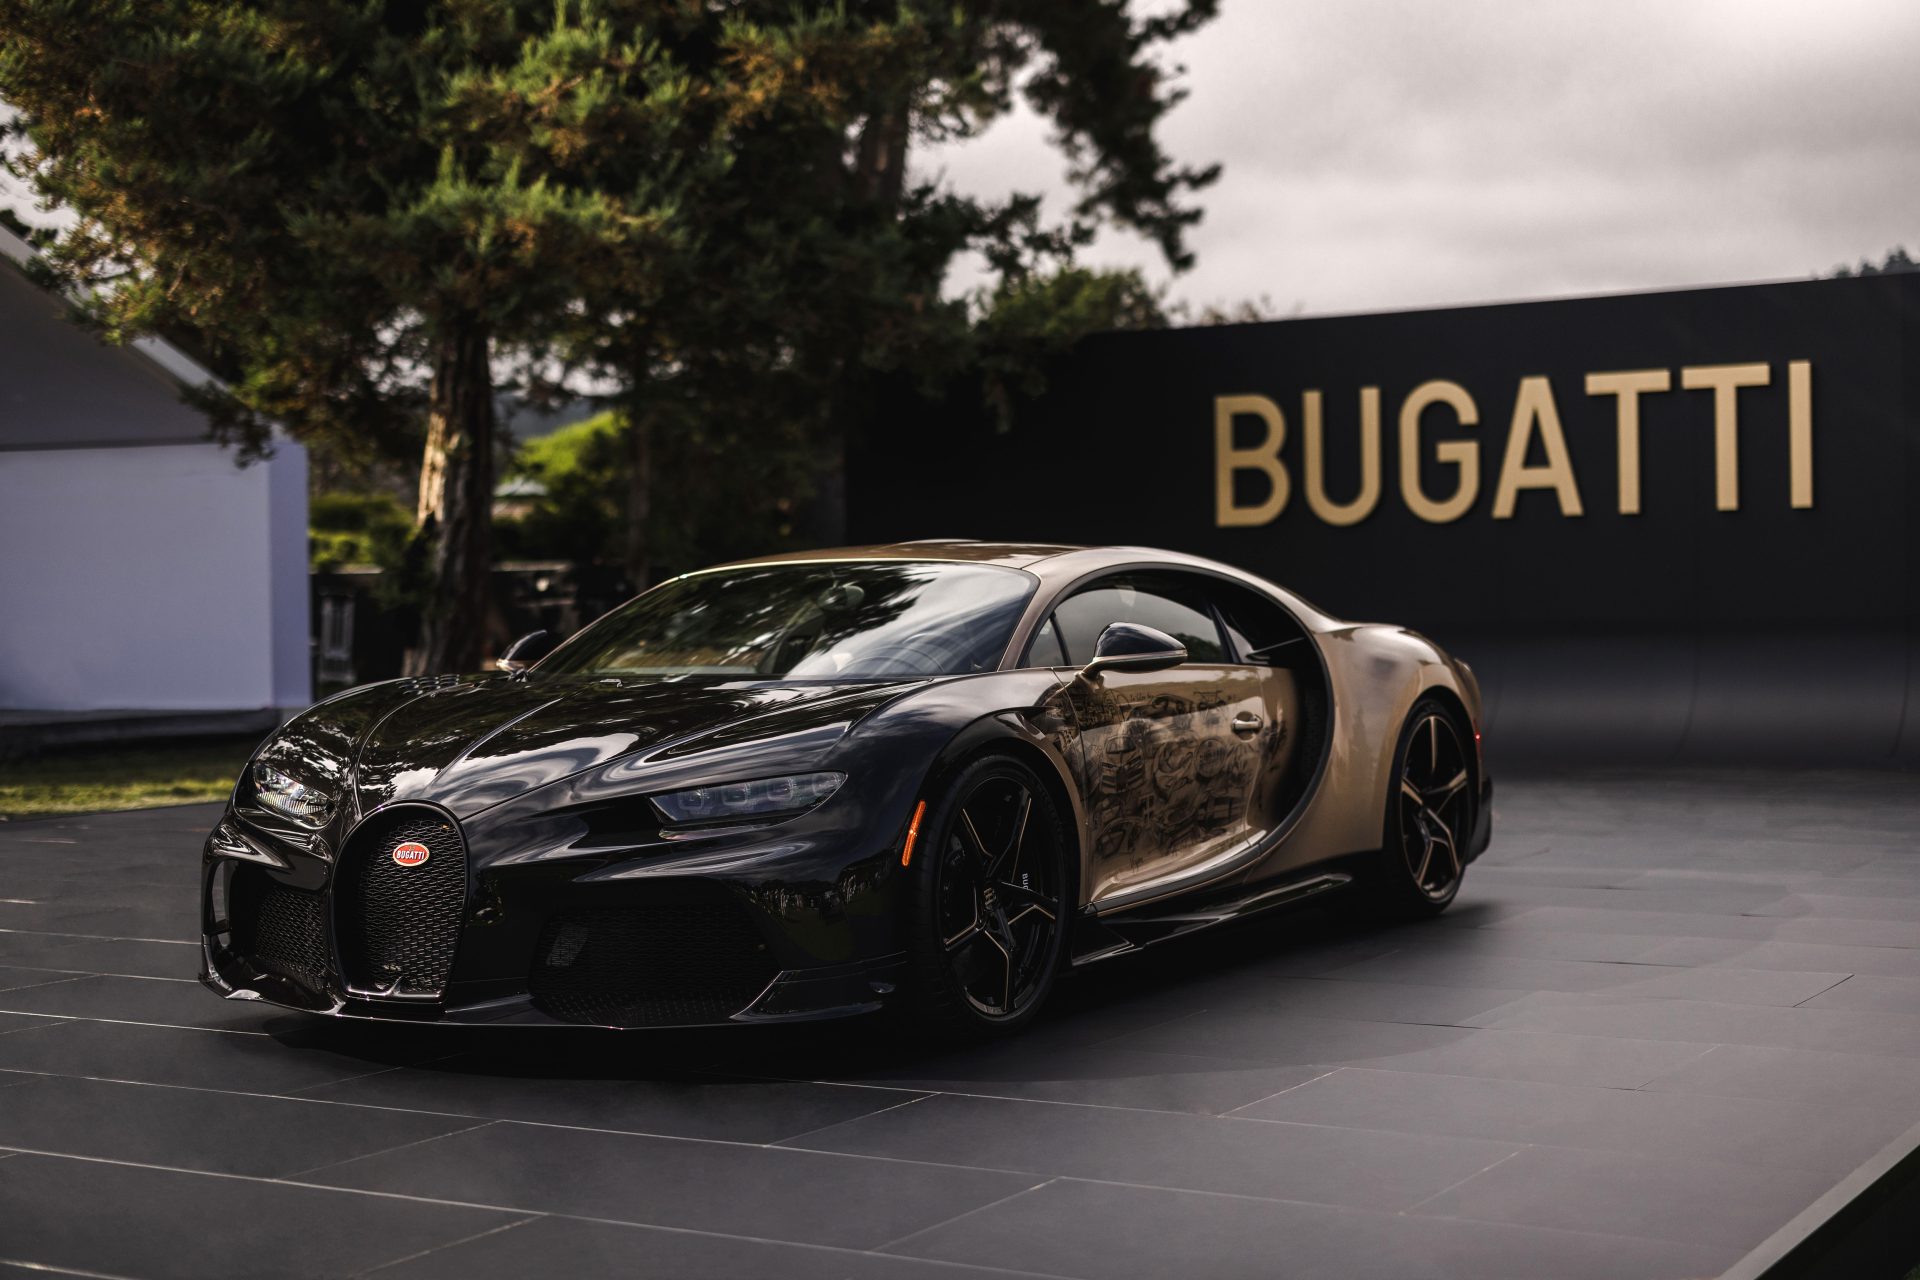 03 BUGATTI The Quail 2023 Η Bugatti προβάλλει την δεξιοτεχνία της αυτοκίνησης στο The Quail